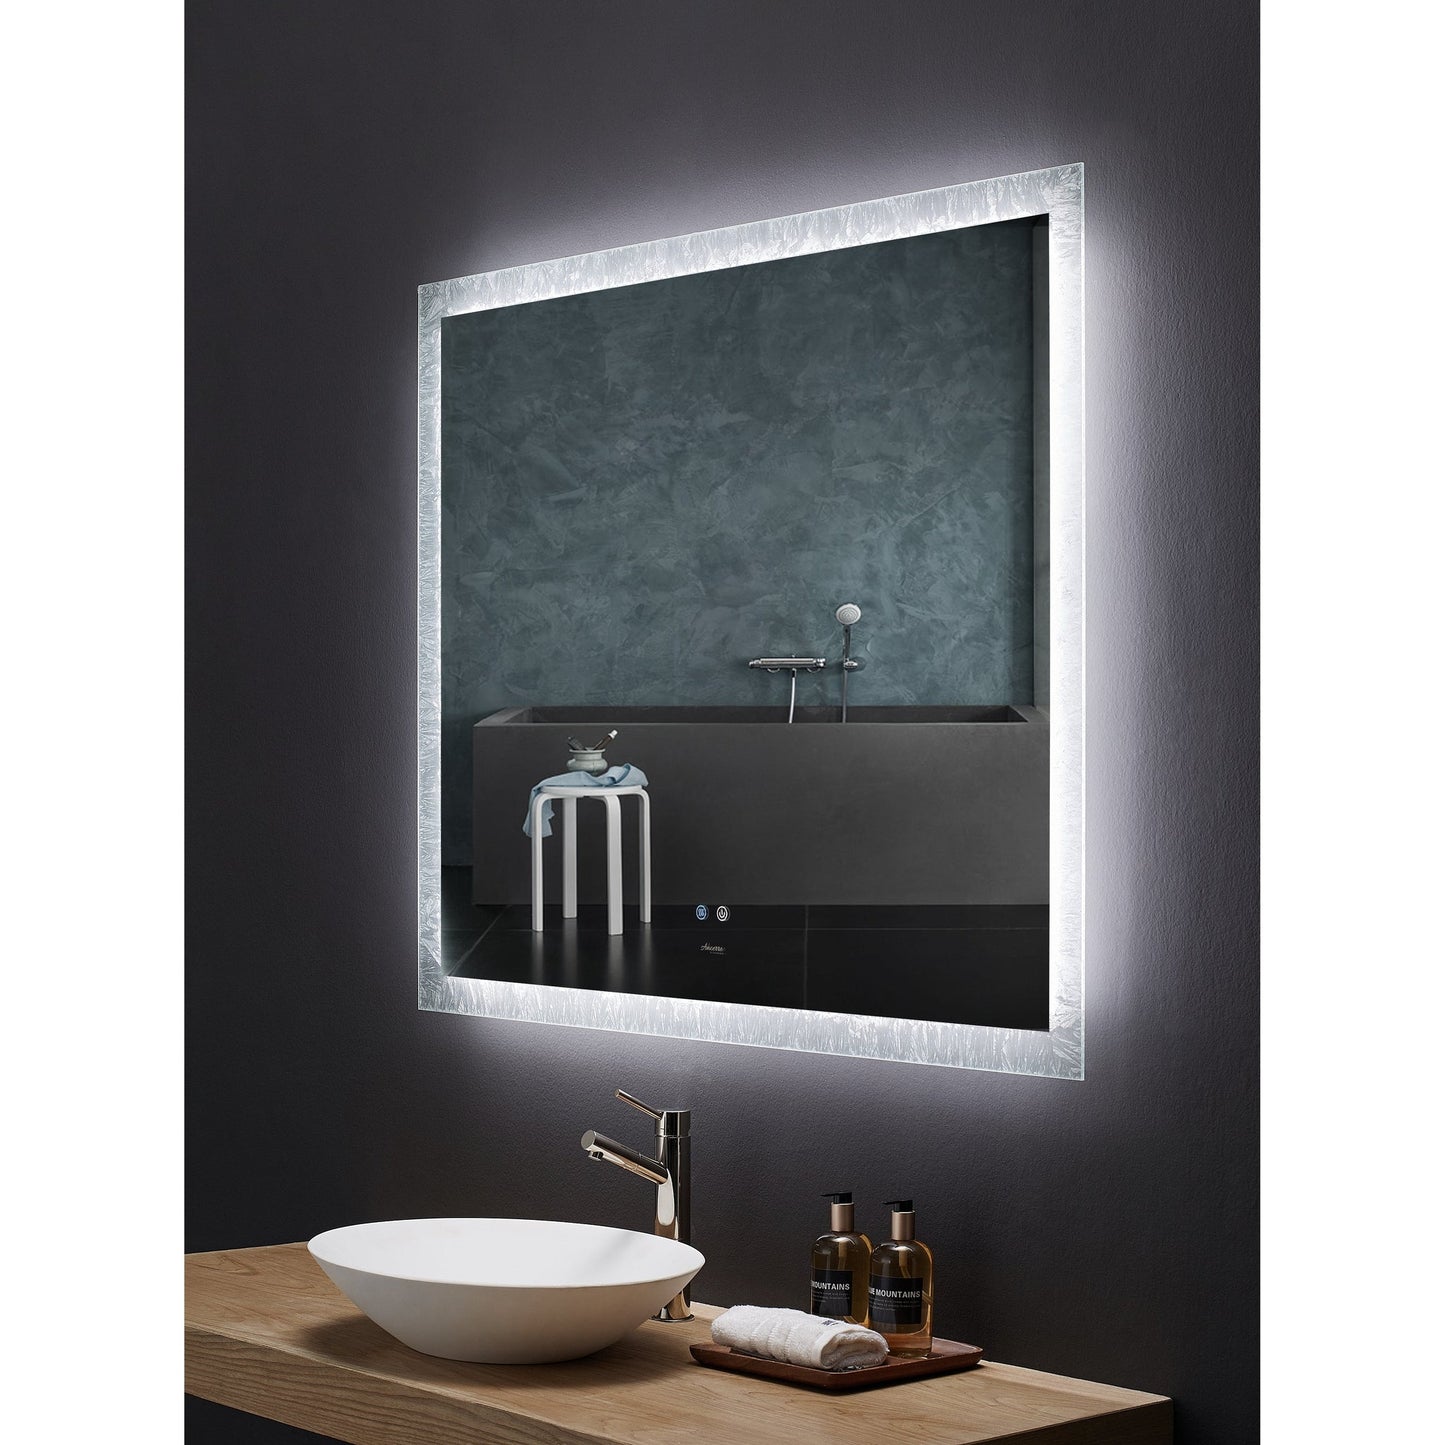 Ancerre Designs Frysta 48" x 40" Modern Rectangular LED Lighted Frameless Bathroom Vanity Mirror With Defogger, Dimmer and Mounting Hardware